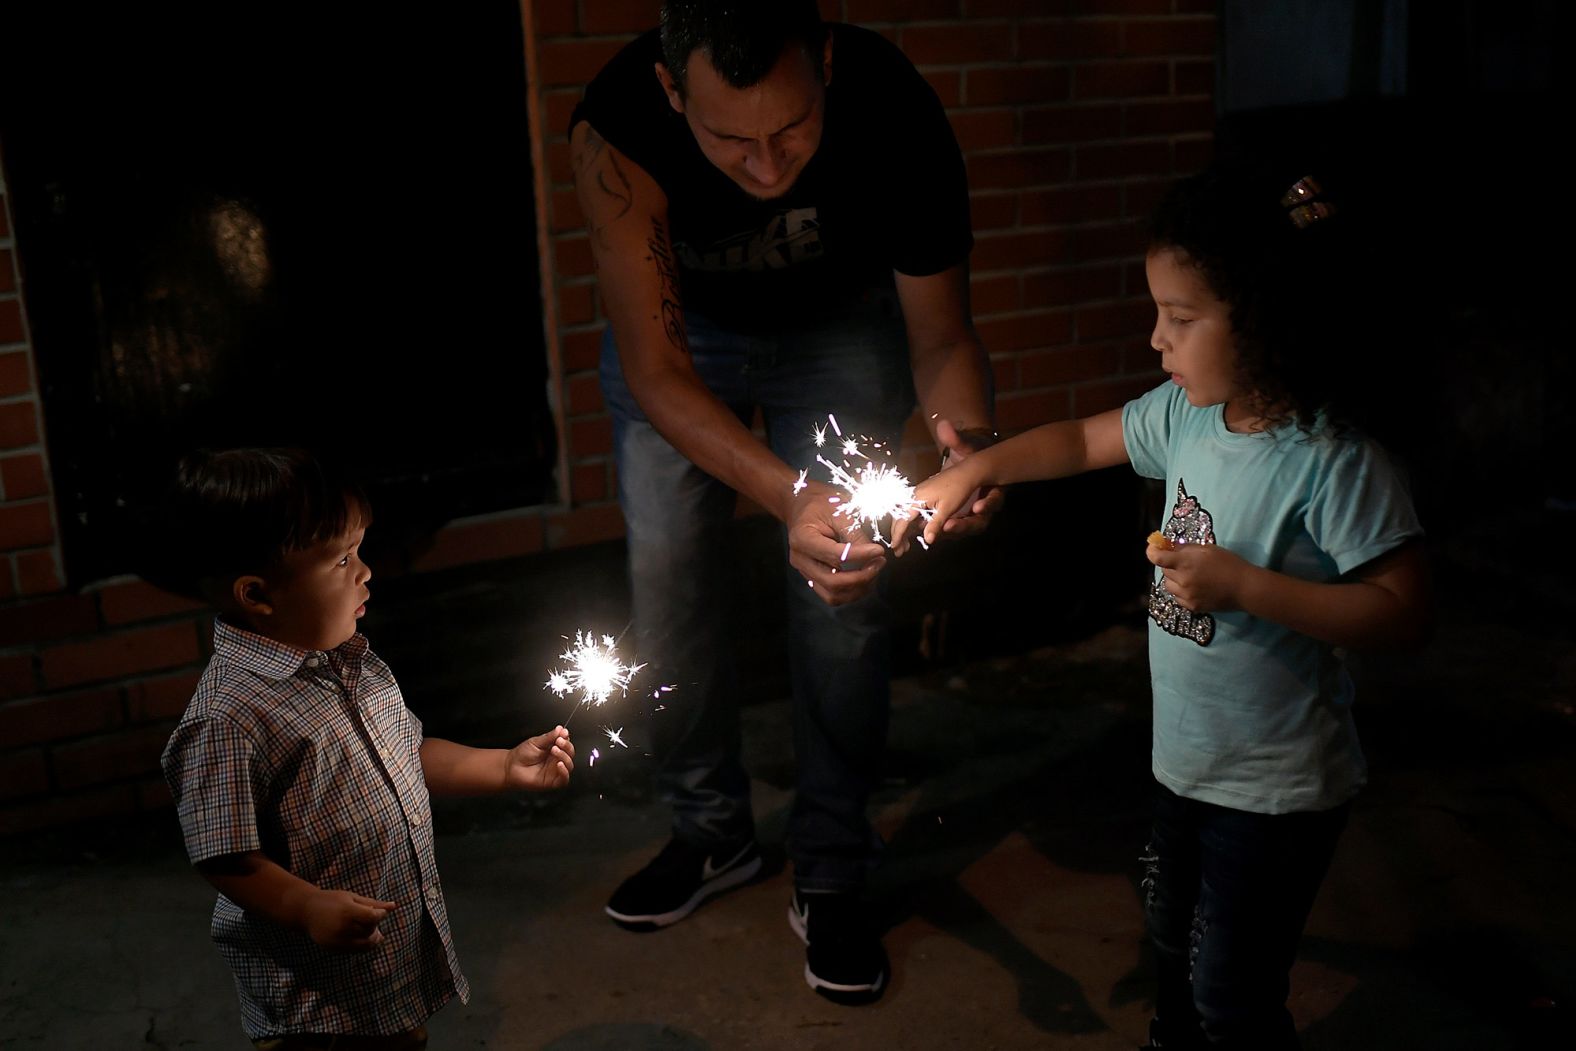 Children play with sparklers in Caracas, Venezuela.